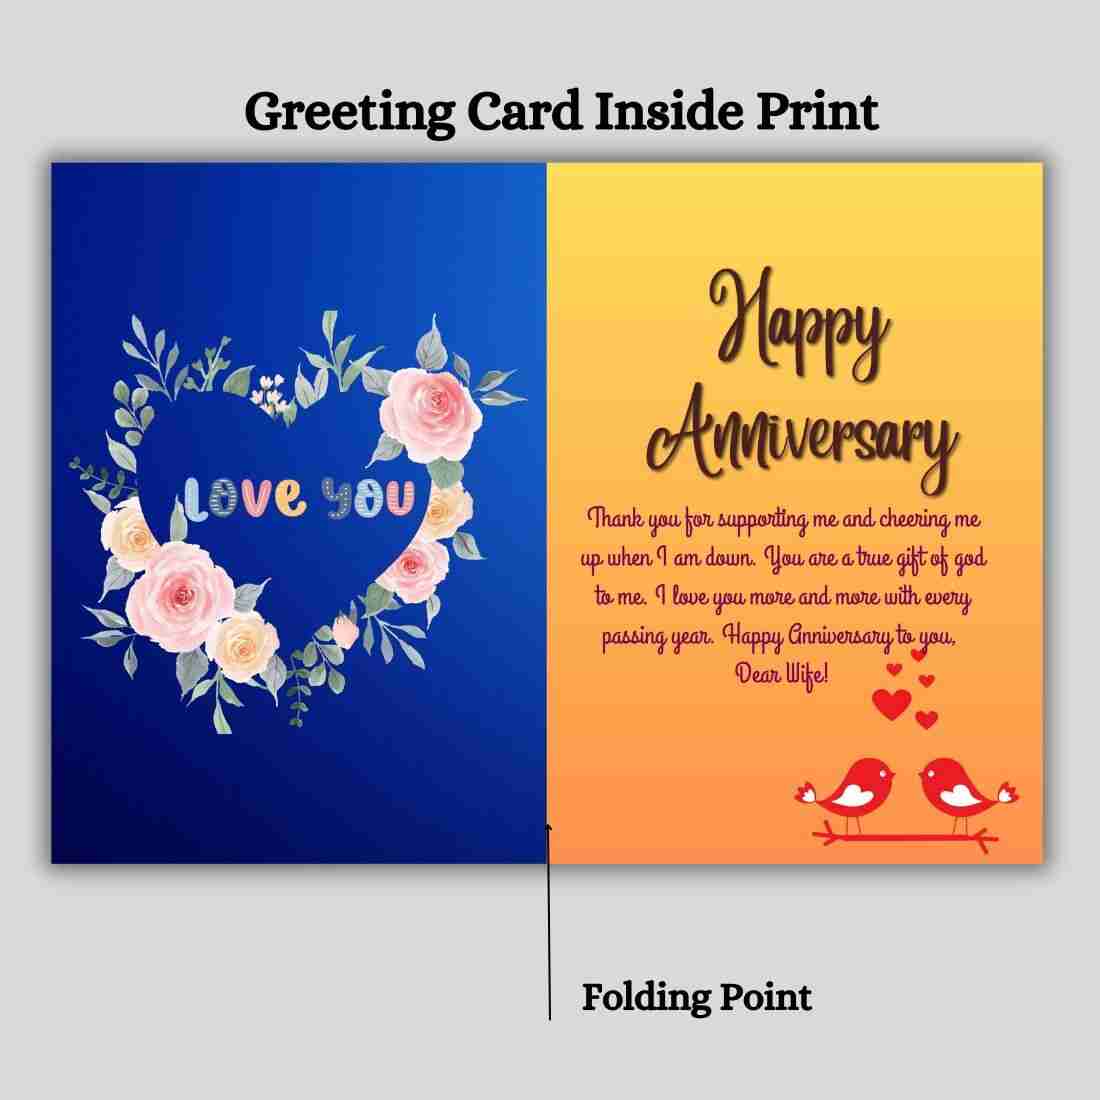 Happy Anniversary My Love Greeting Card